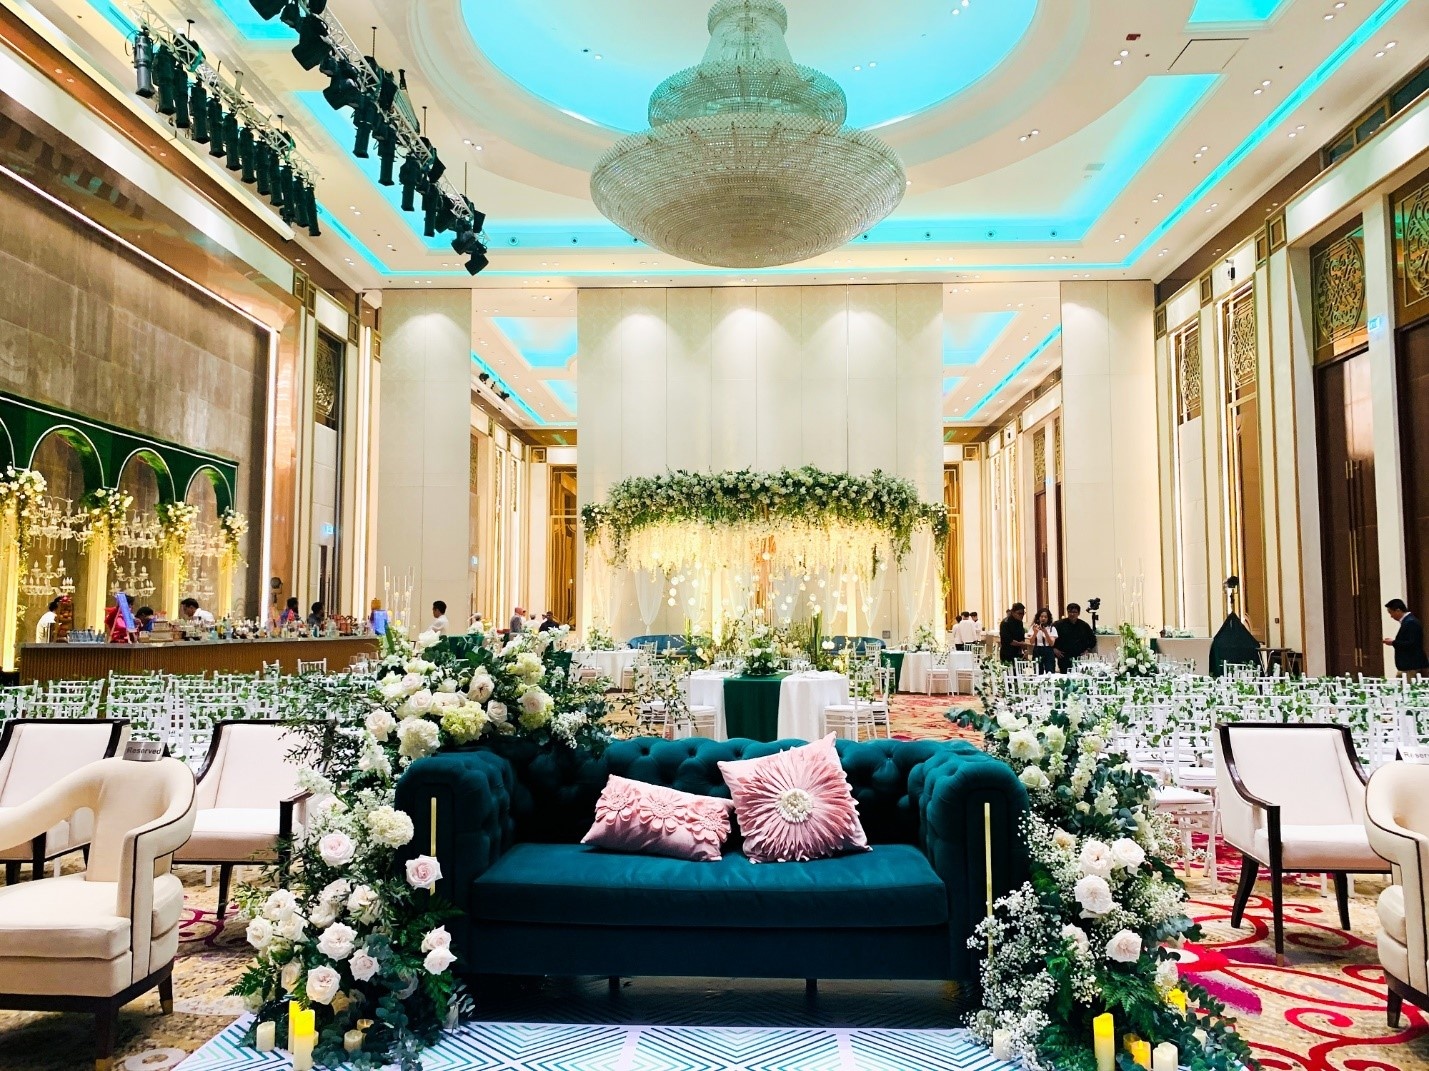 Sheraton Danang Resort is a popular wedding venue for Indian jet set